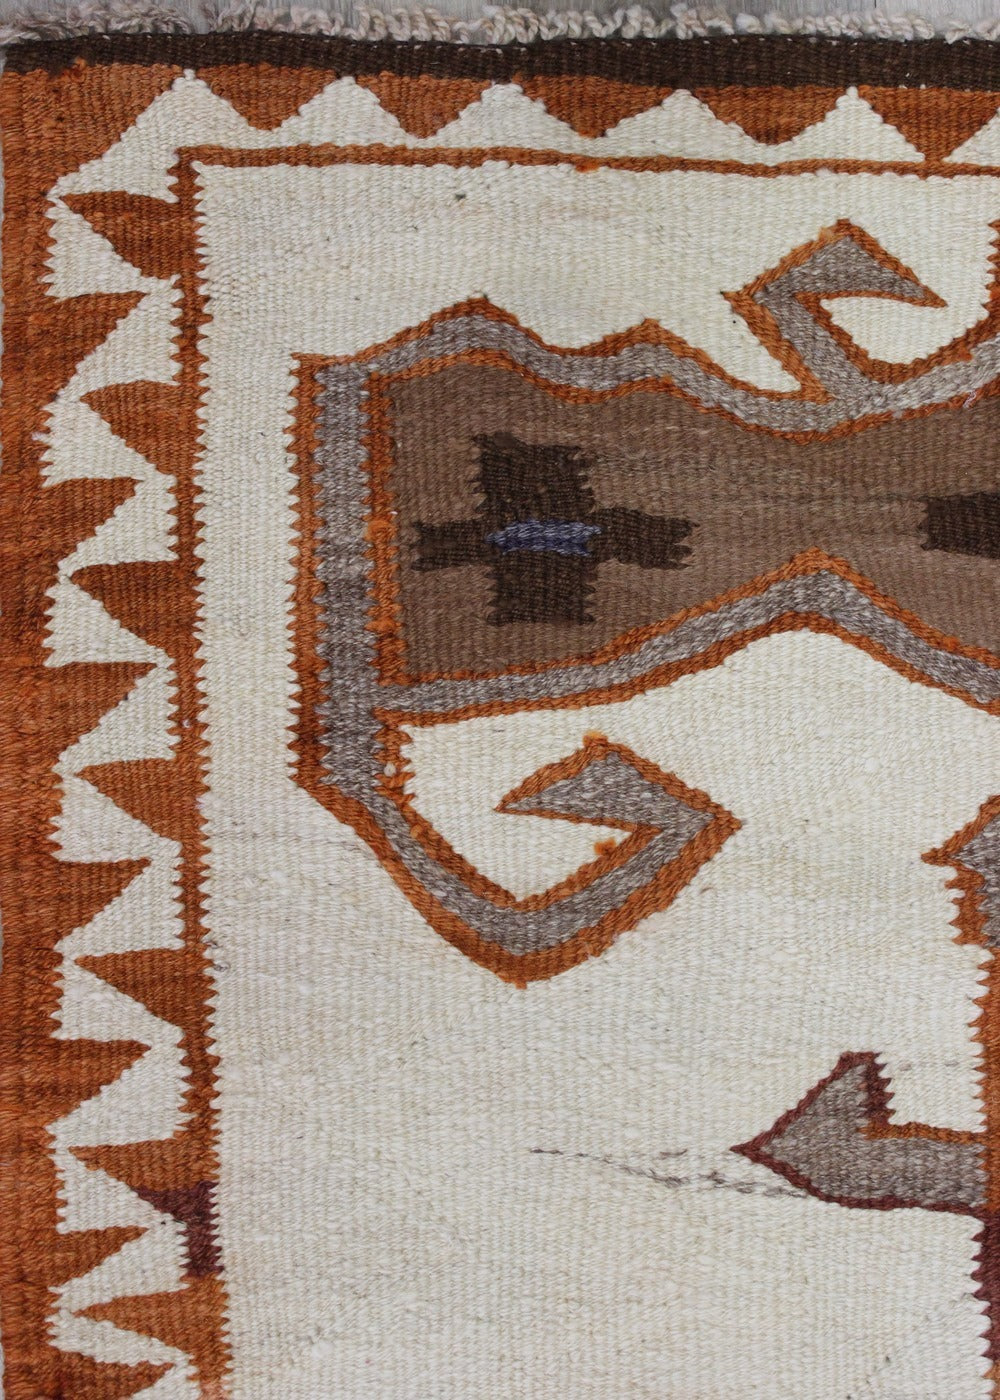 Vintage Herki Kilim Handwoven Tribal Rug, J67101